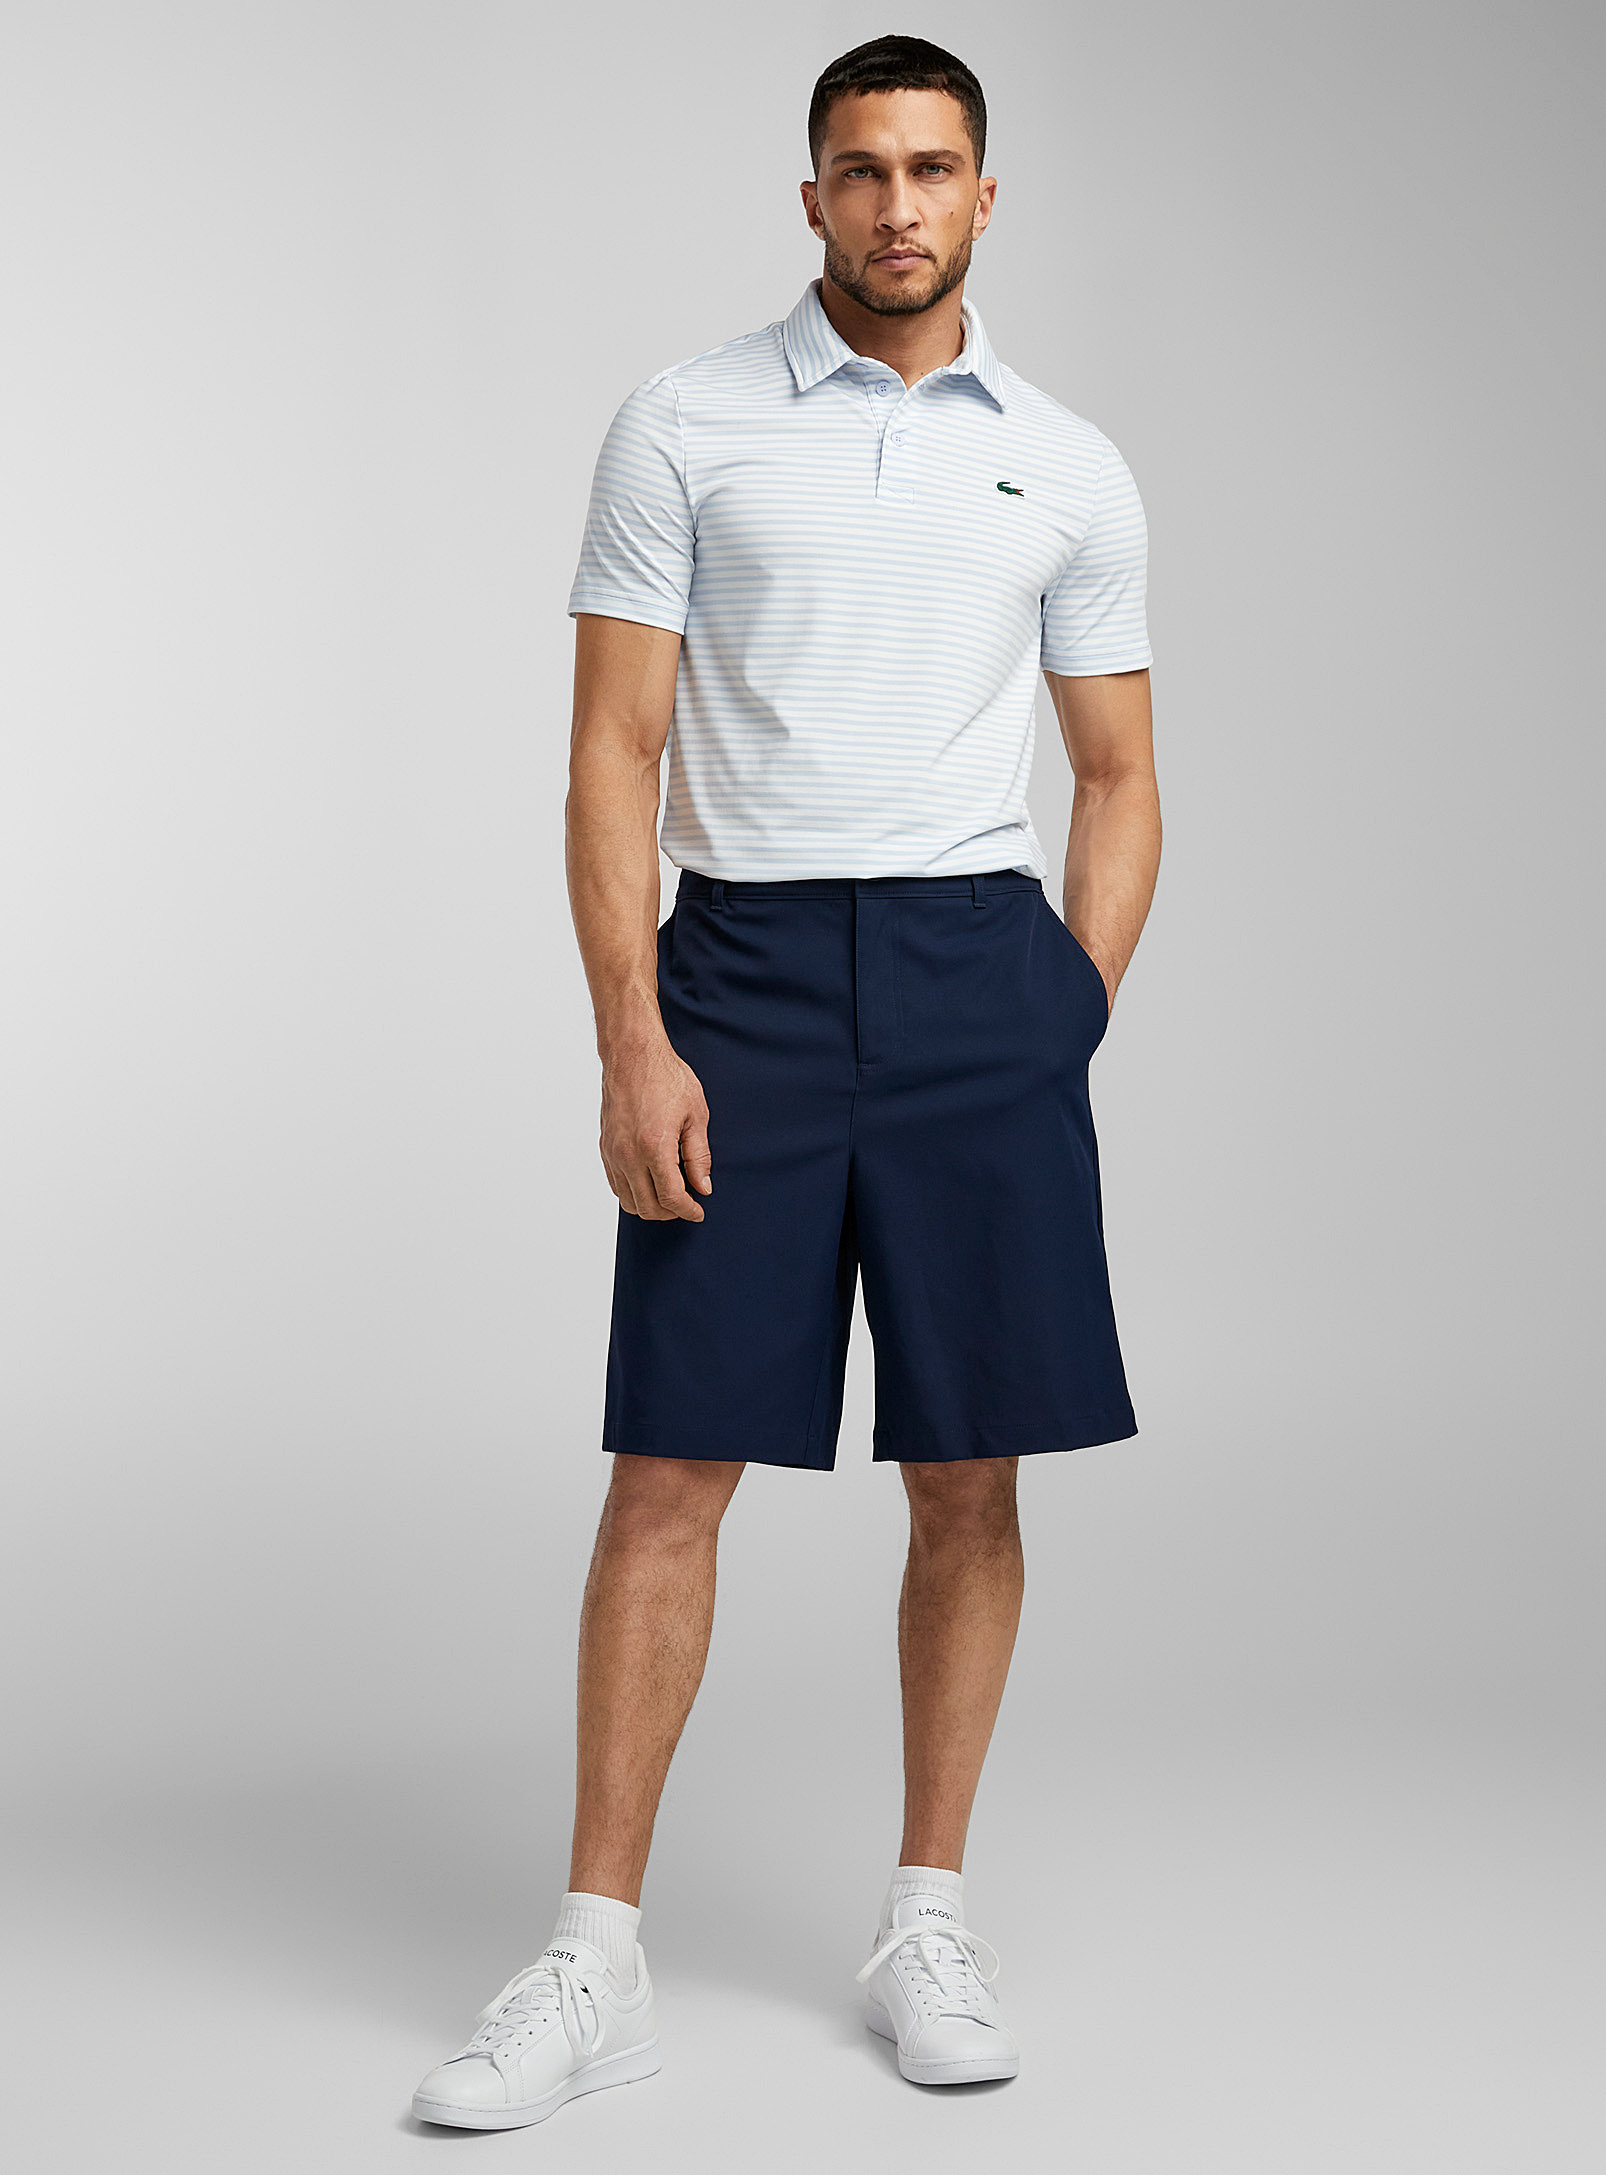 Lacoste - Men's Casual golf short